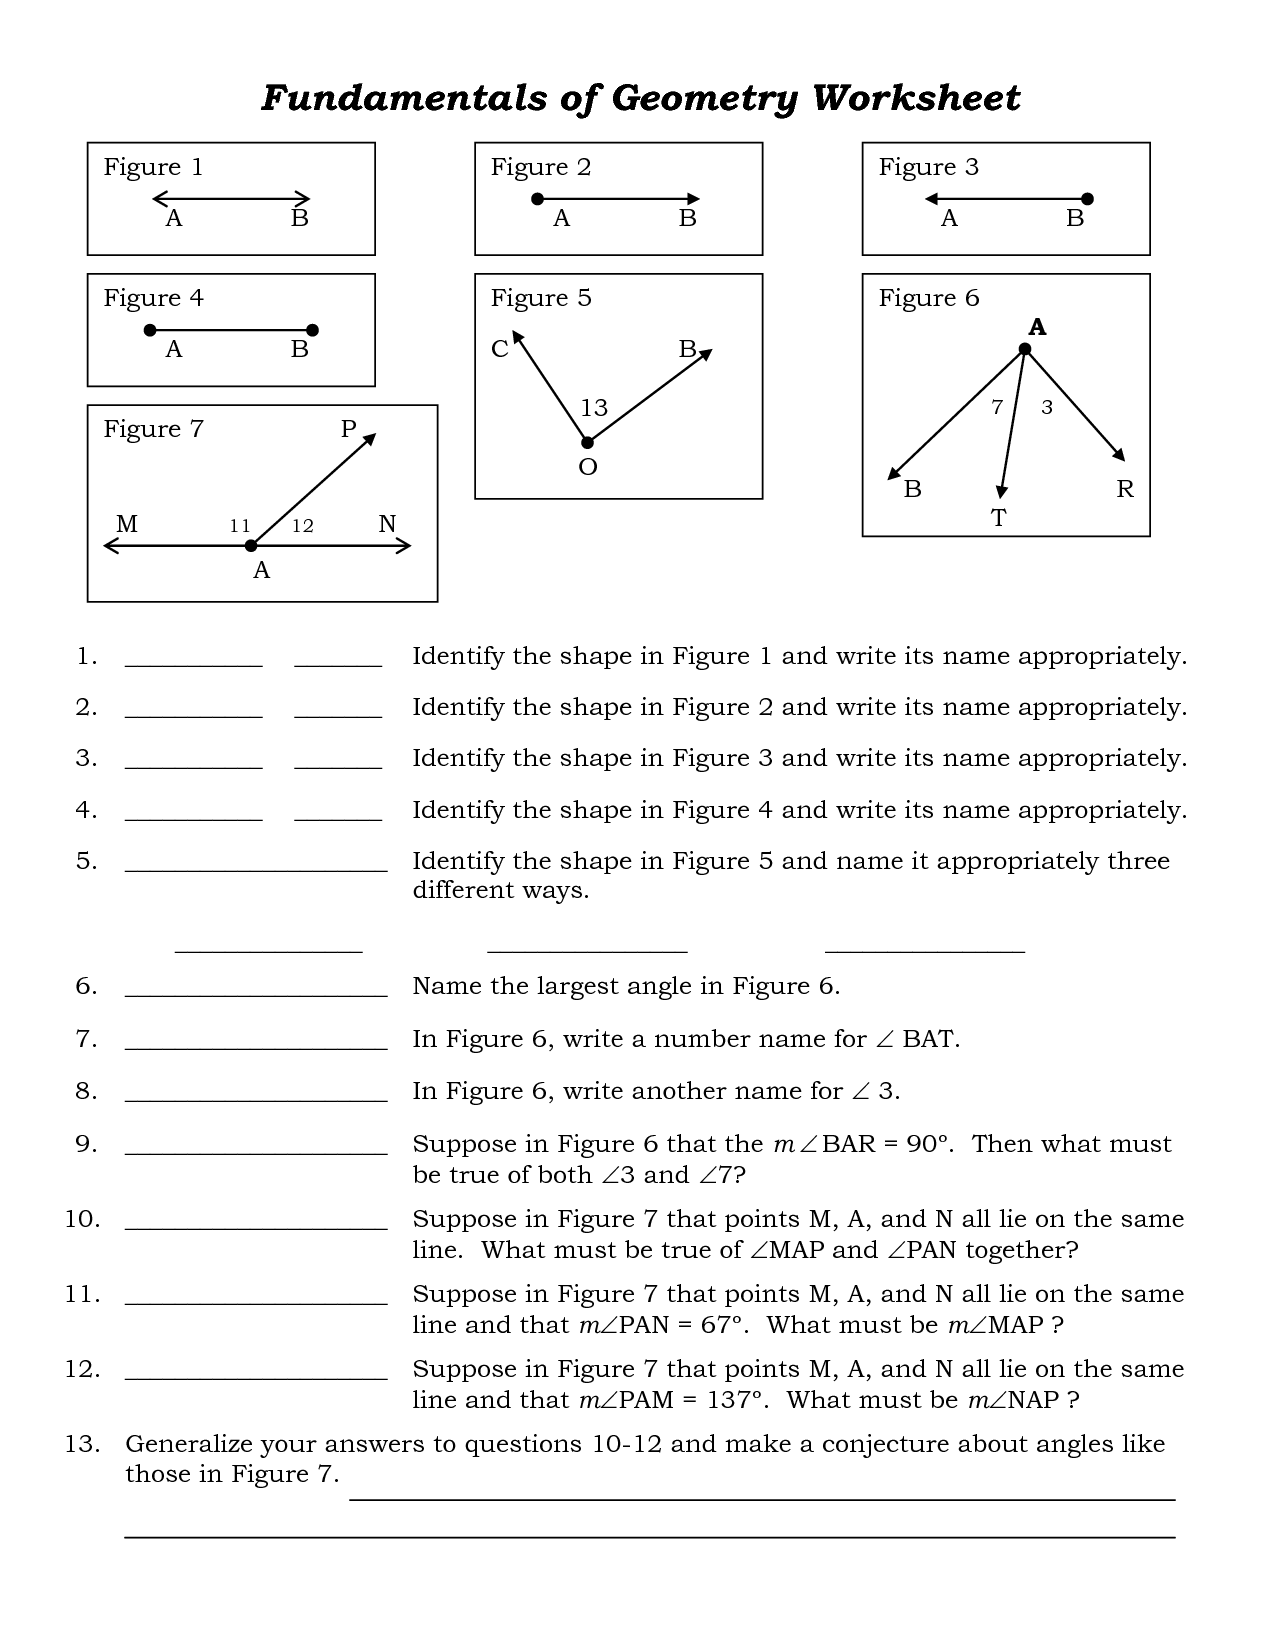 download-micrometer-reading-practice-worksheets-gantt-chart-excel